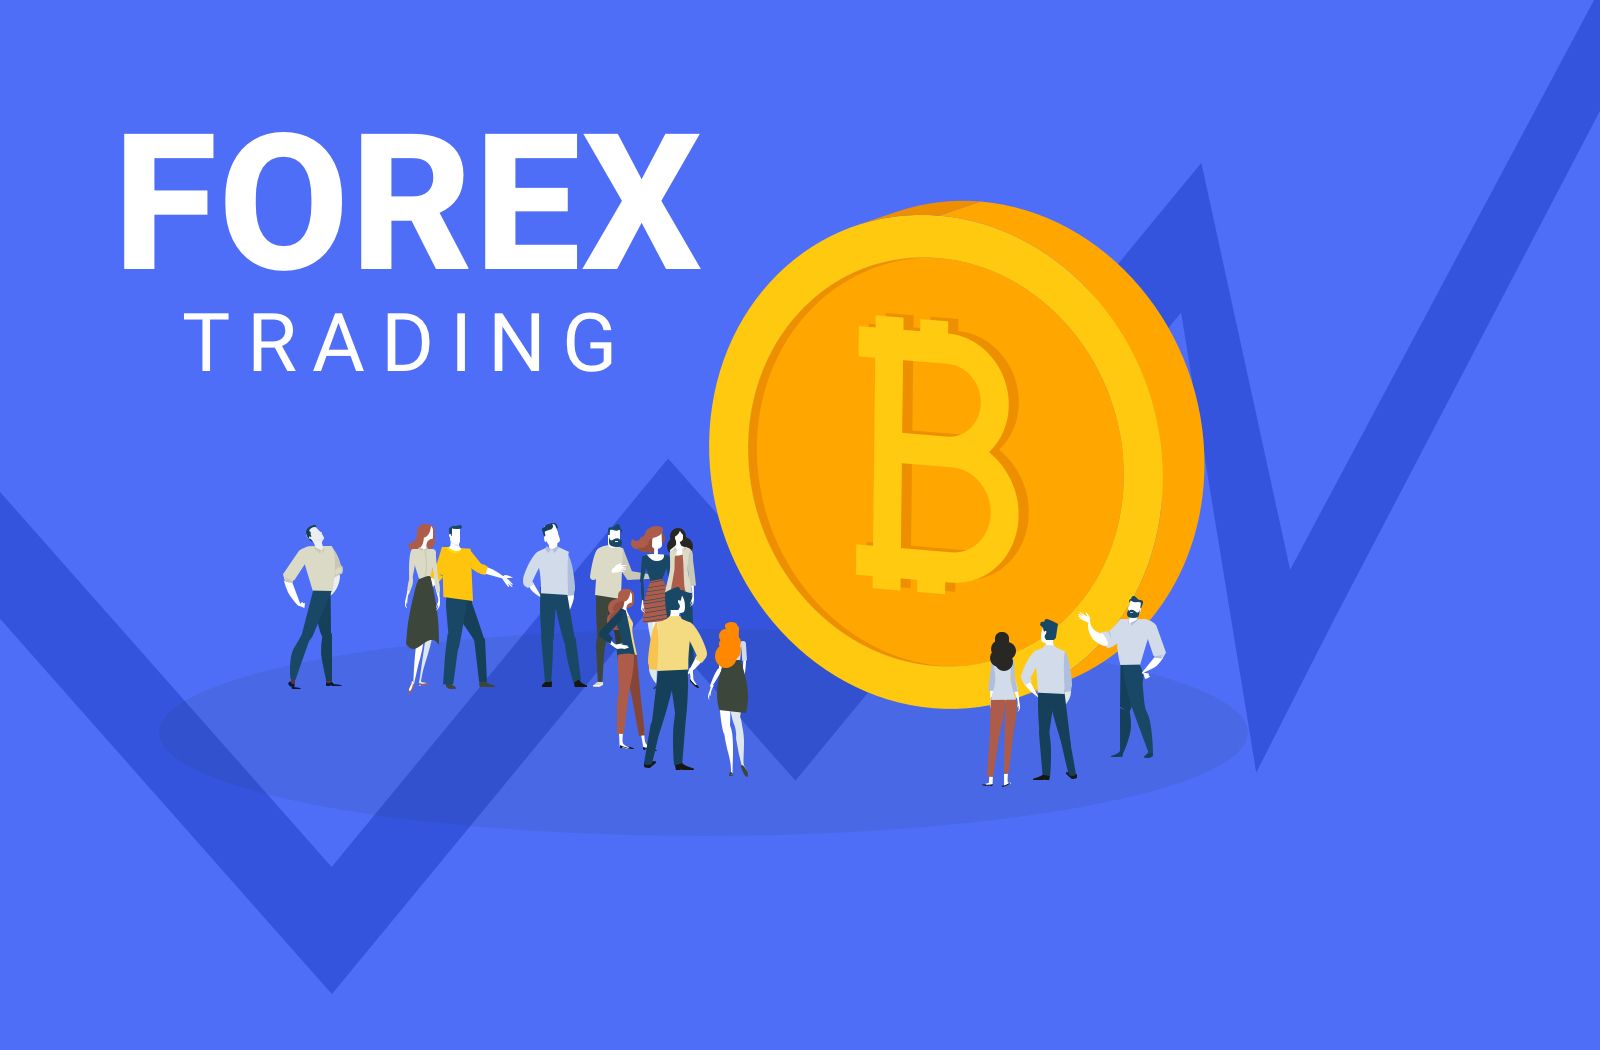 forex vs bitcoin